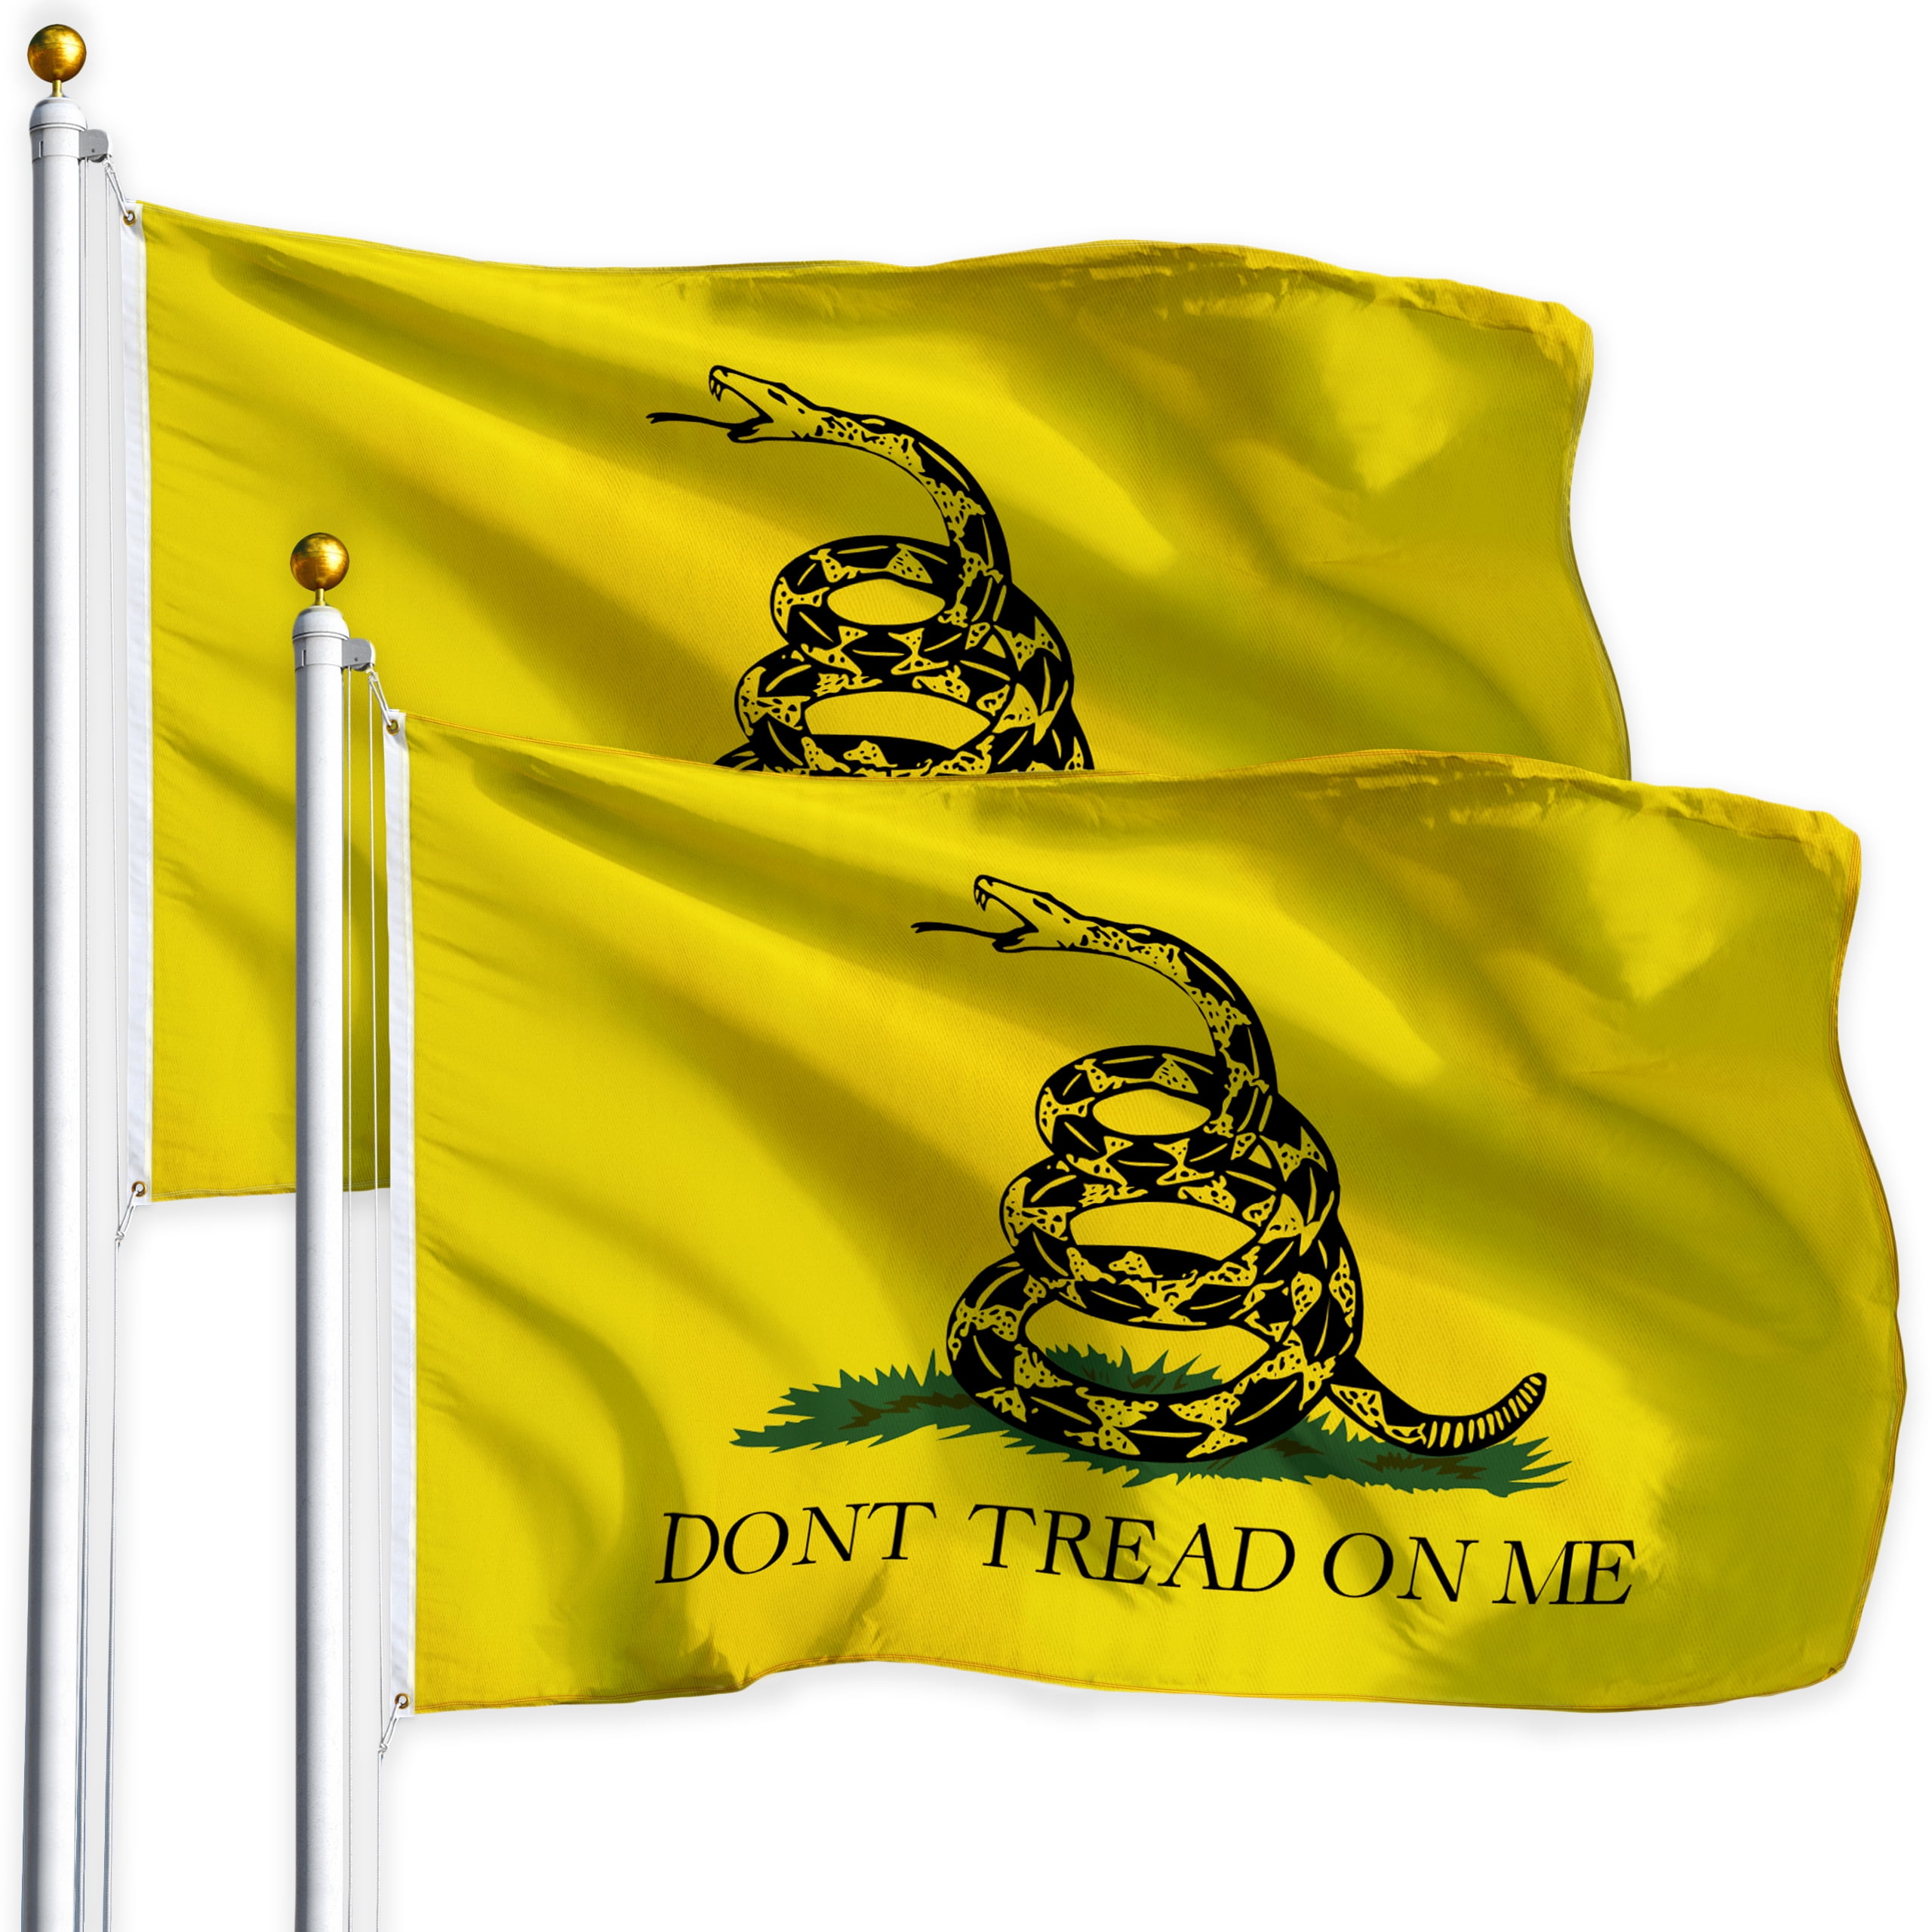 DON'T TREAD ON ME GADSDEN TEA PARTY  FLAG 3X5 